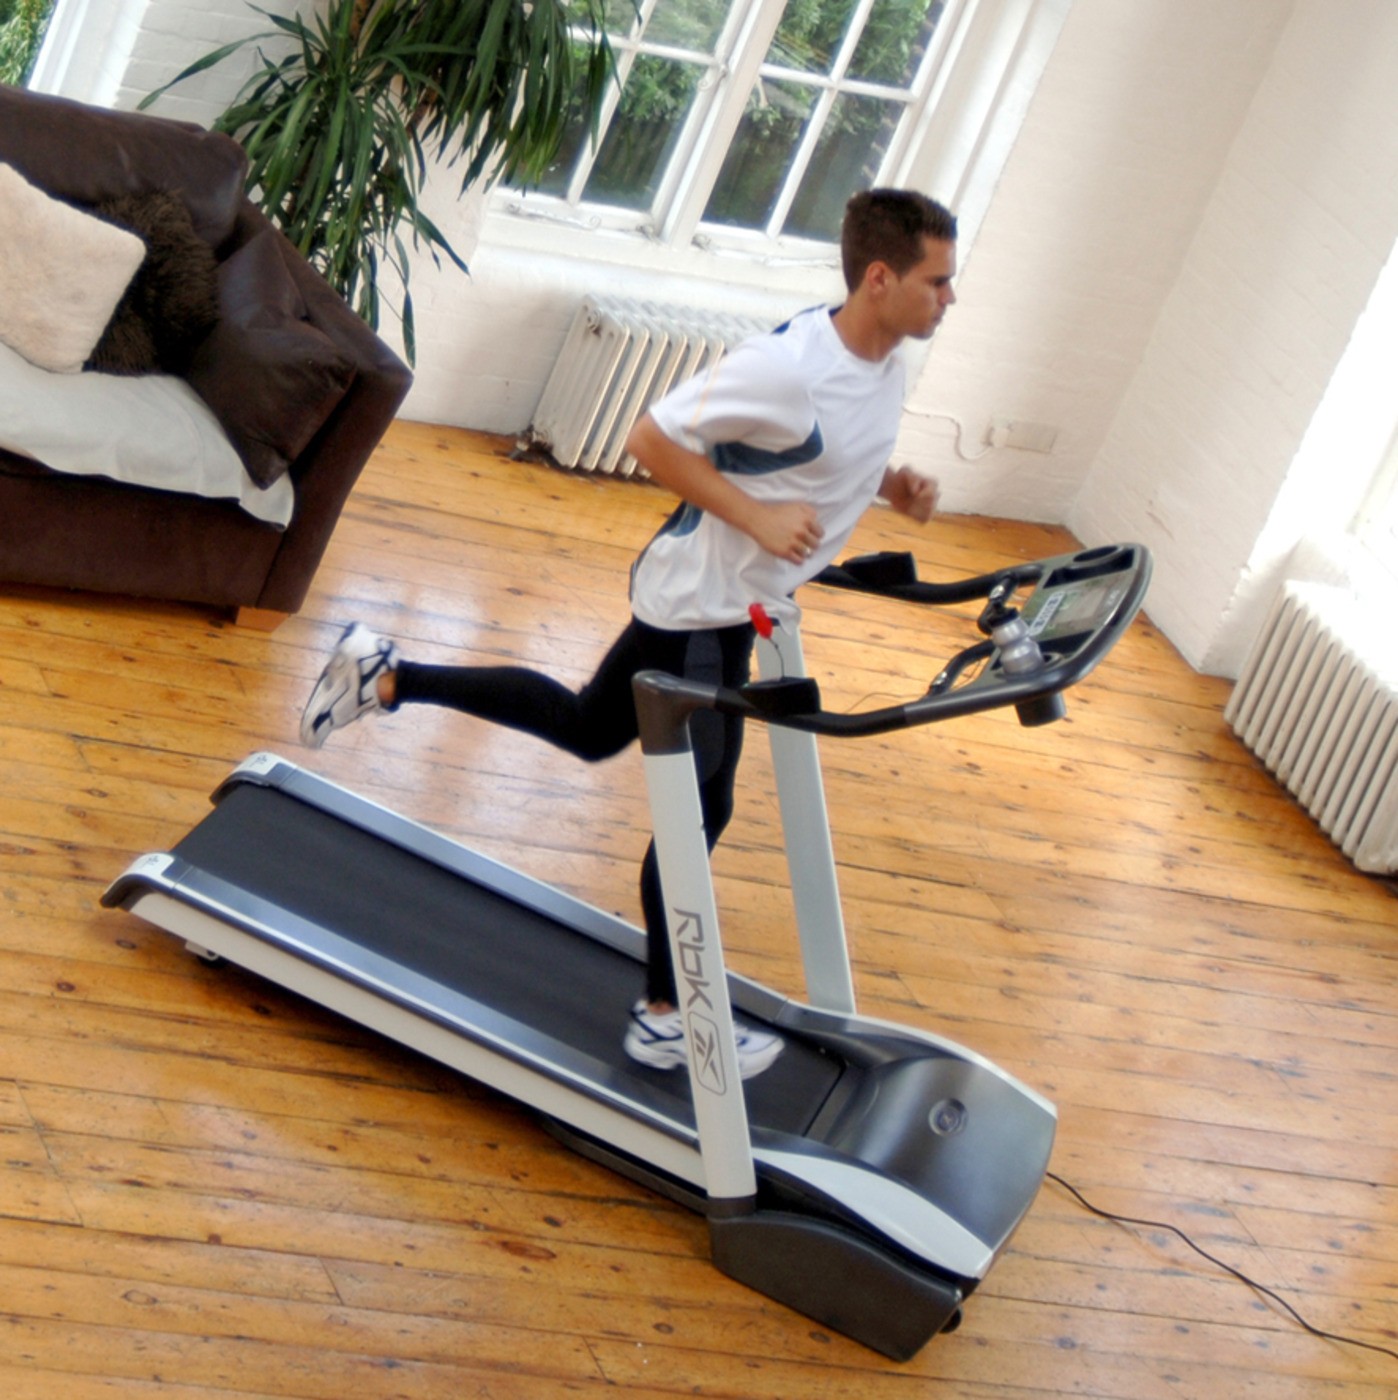 bh fitness pioneer classic treadmill manual